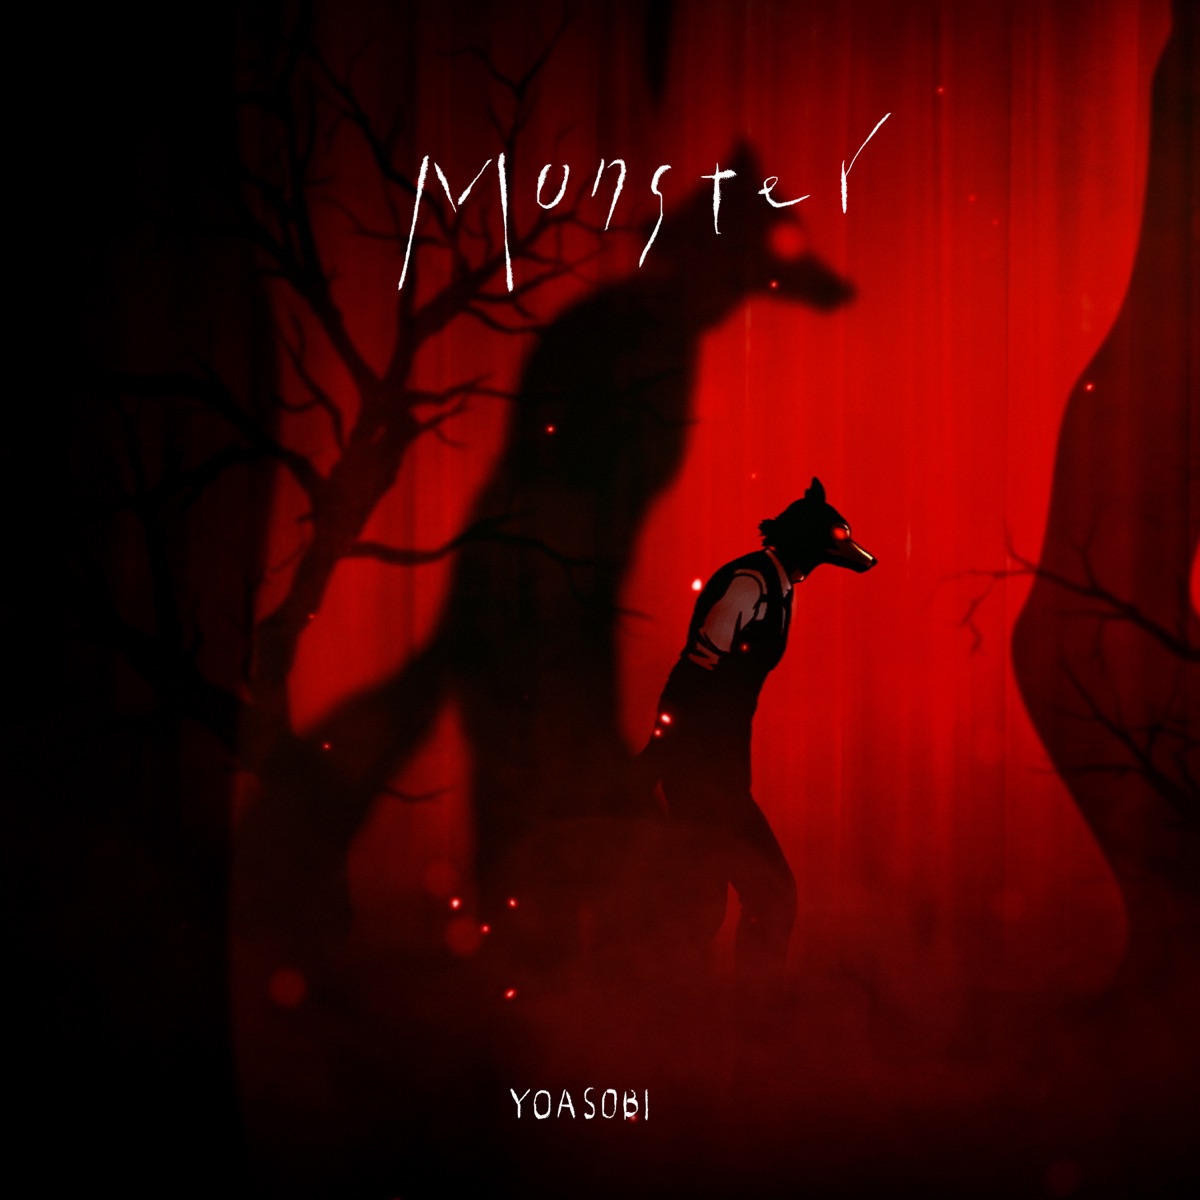 Cover art for『YOASOBI - Monster (English Version)』from the release『Monster』